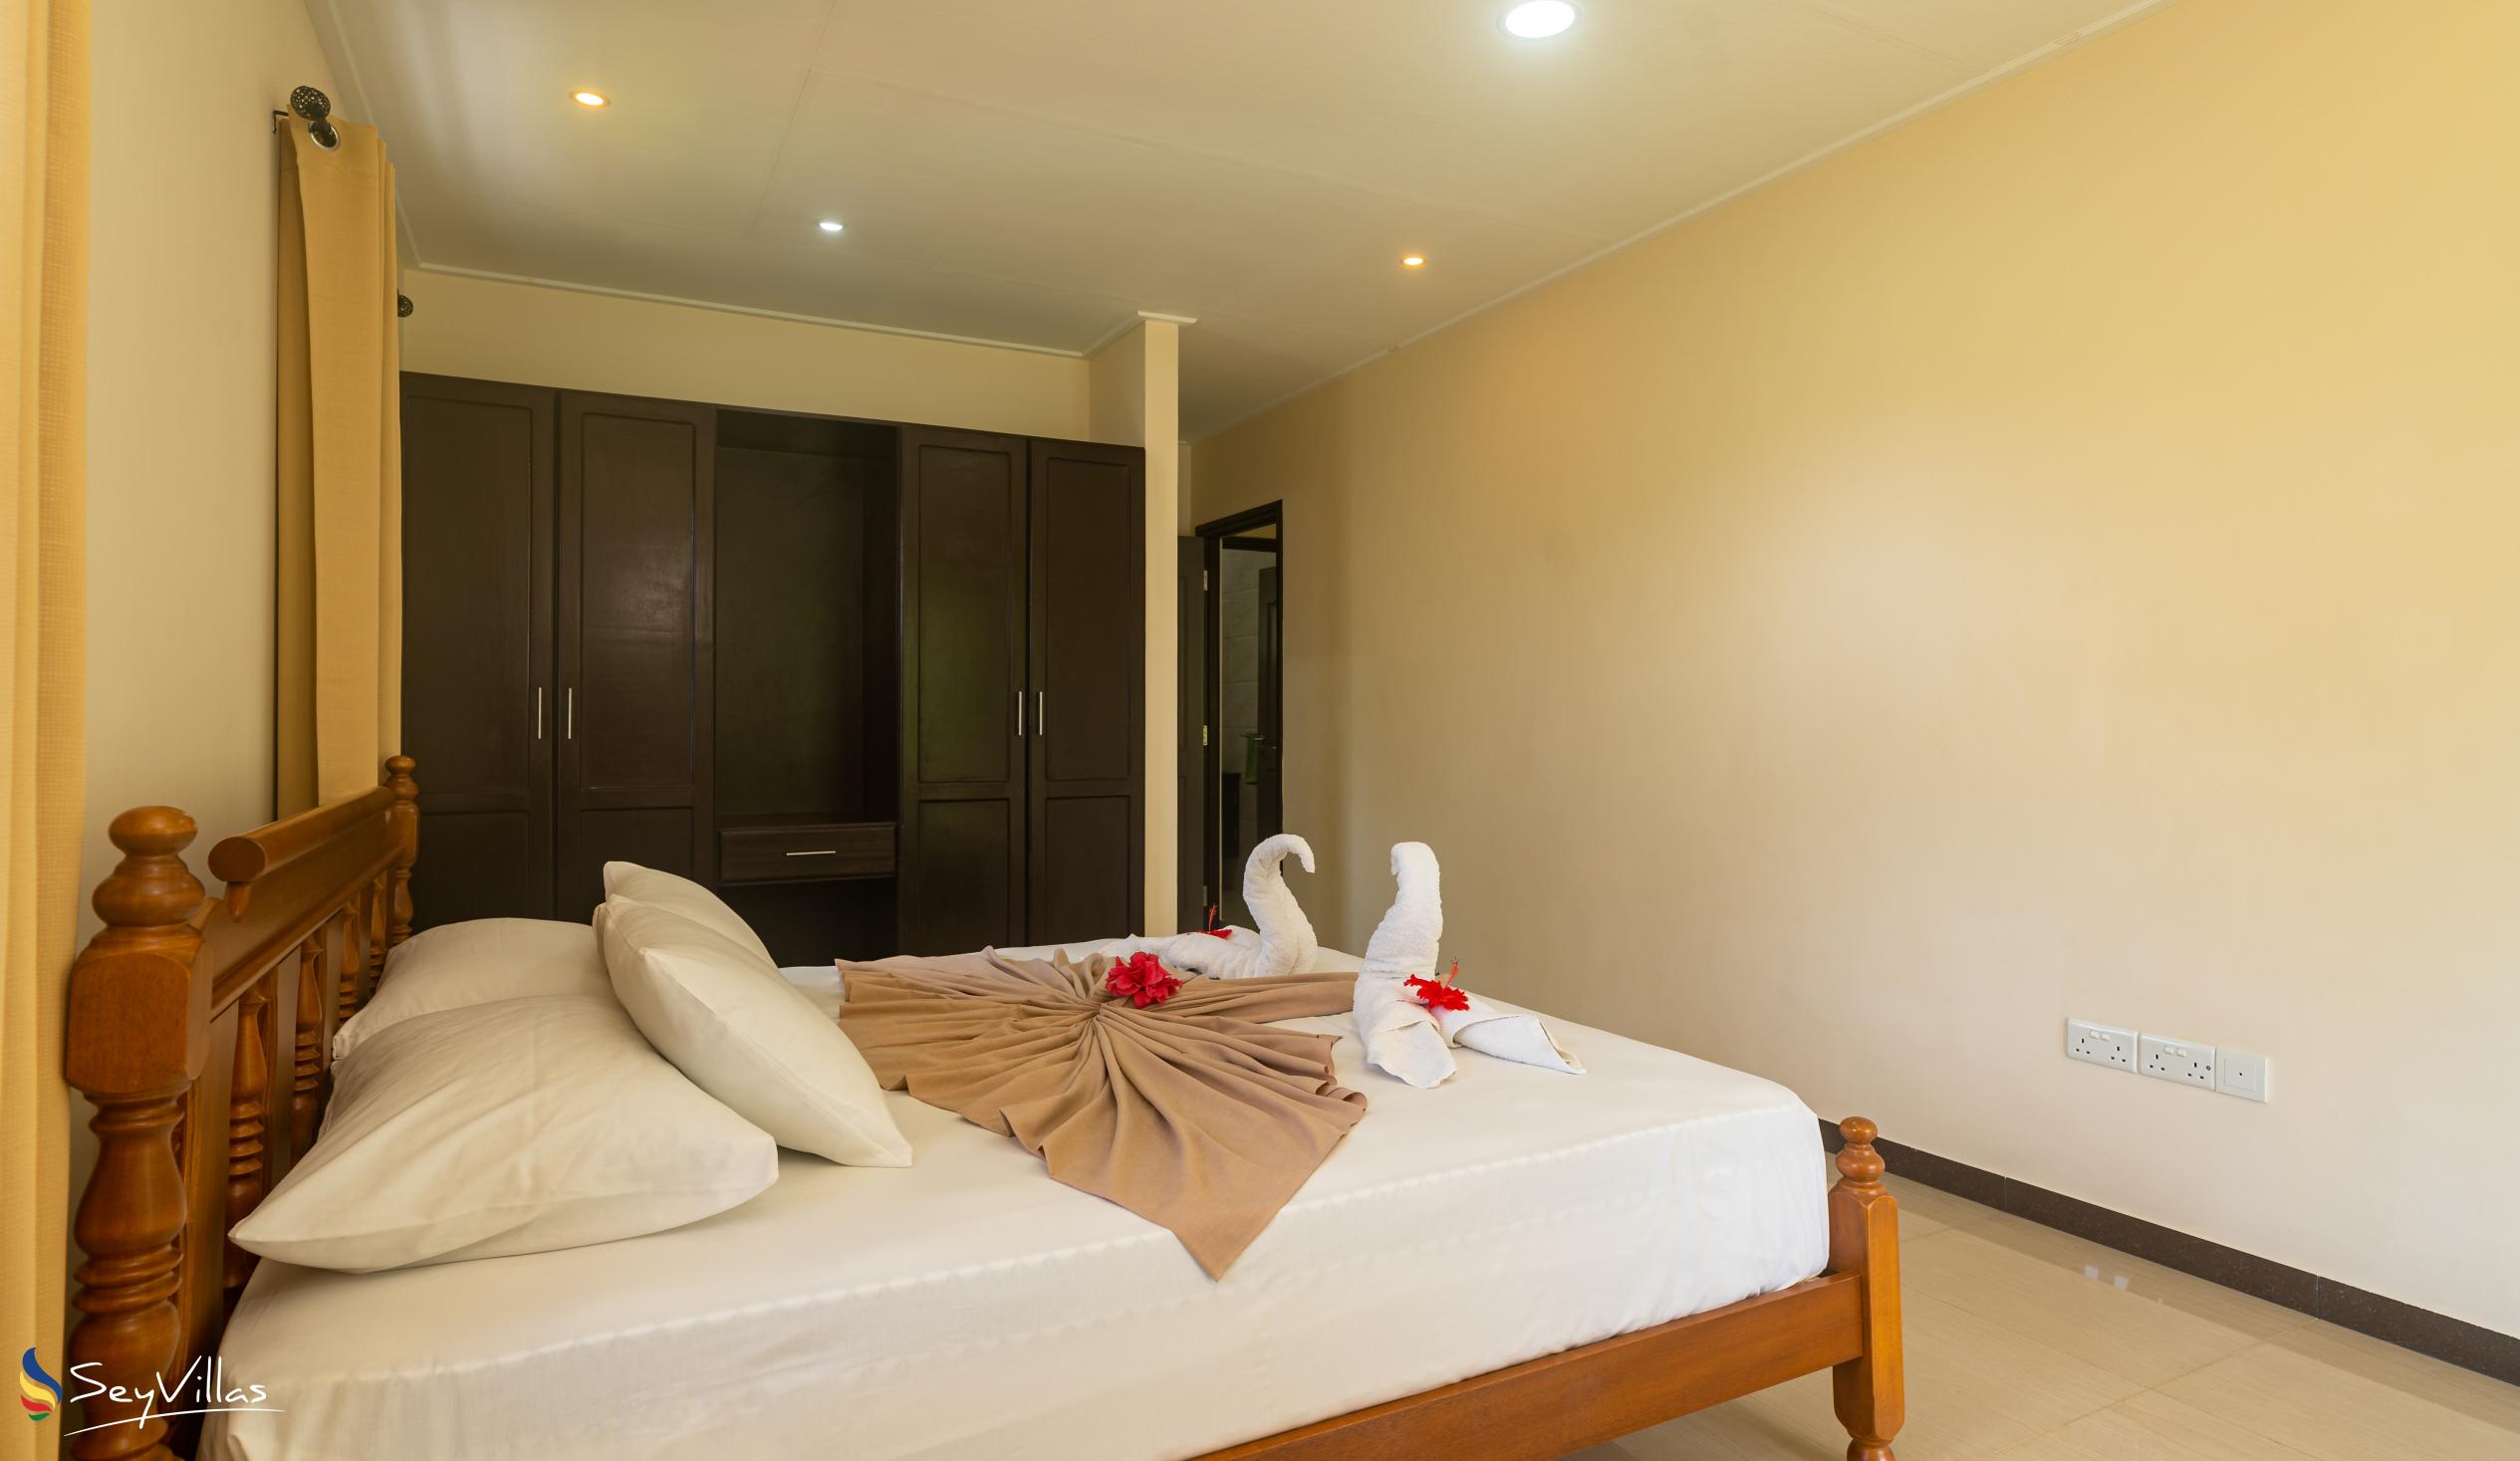 Photo 57: JAIDSS Holiday Apartments - 2-Bedroom Apartment - Mahé (Seychelles)